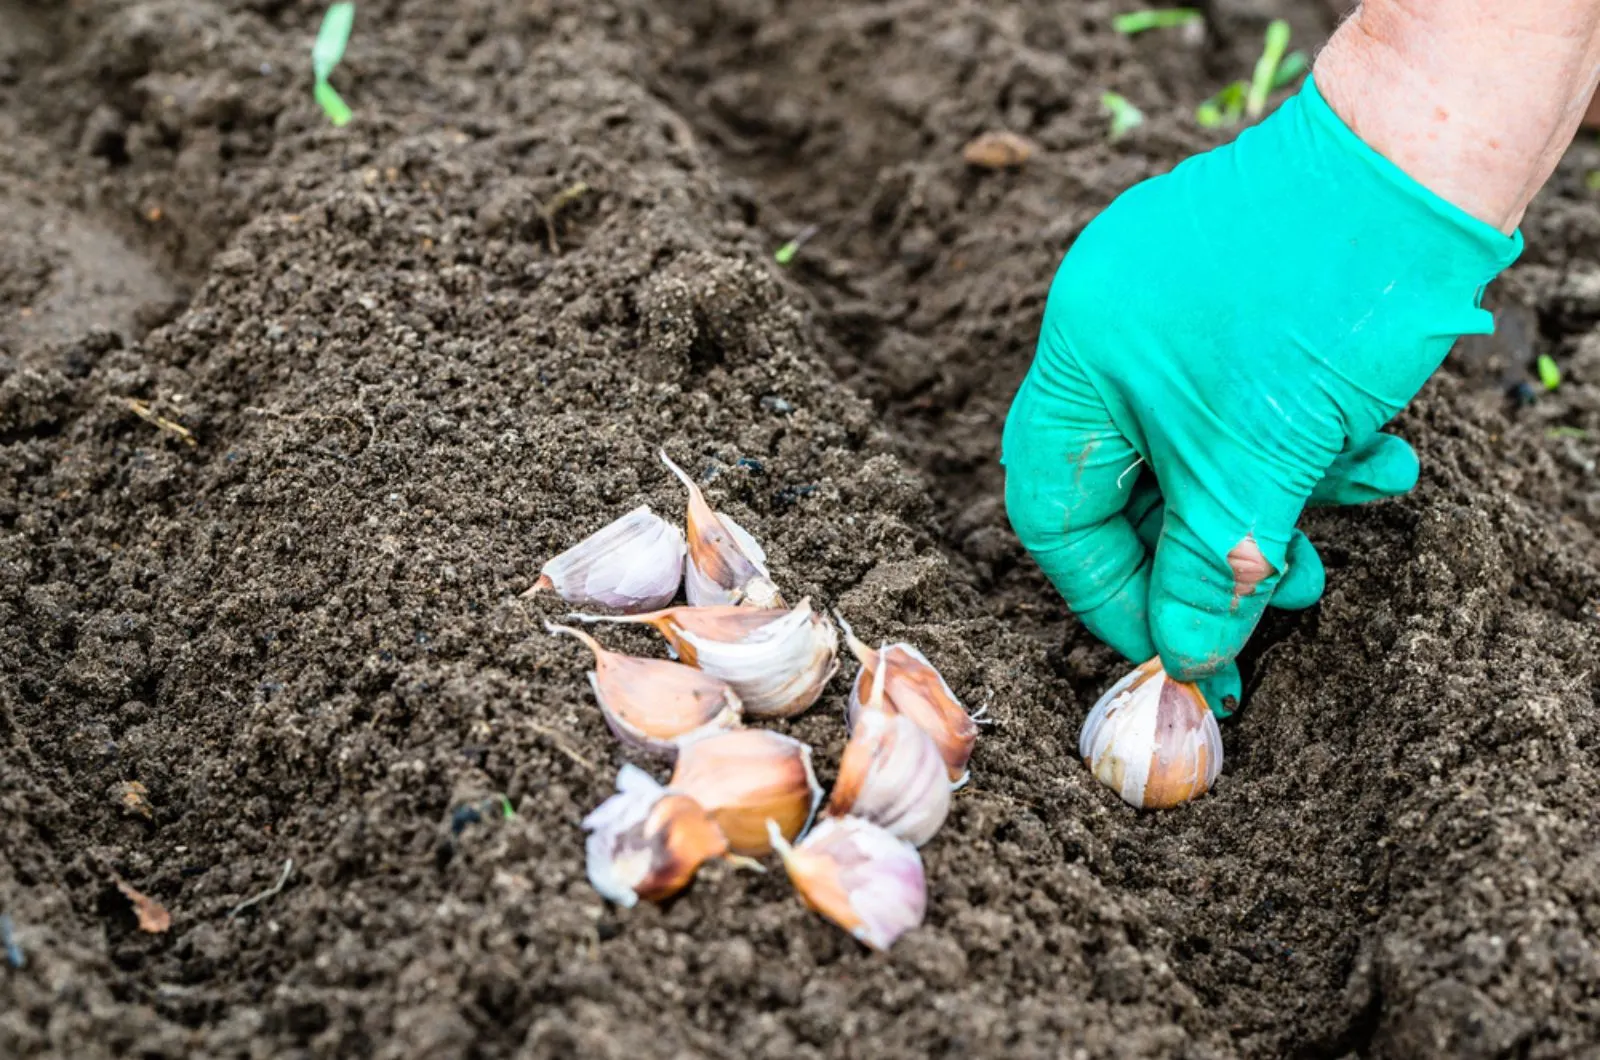 Hand planting garlic in the vegetable garden